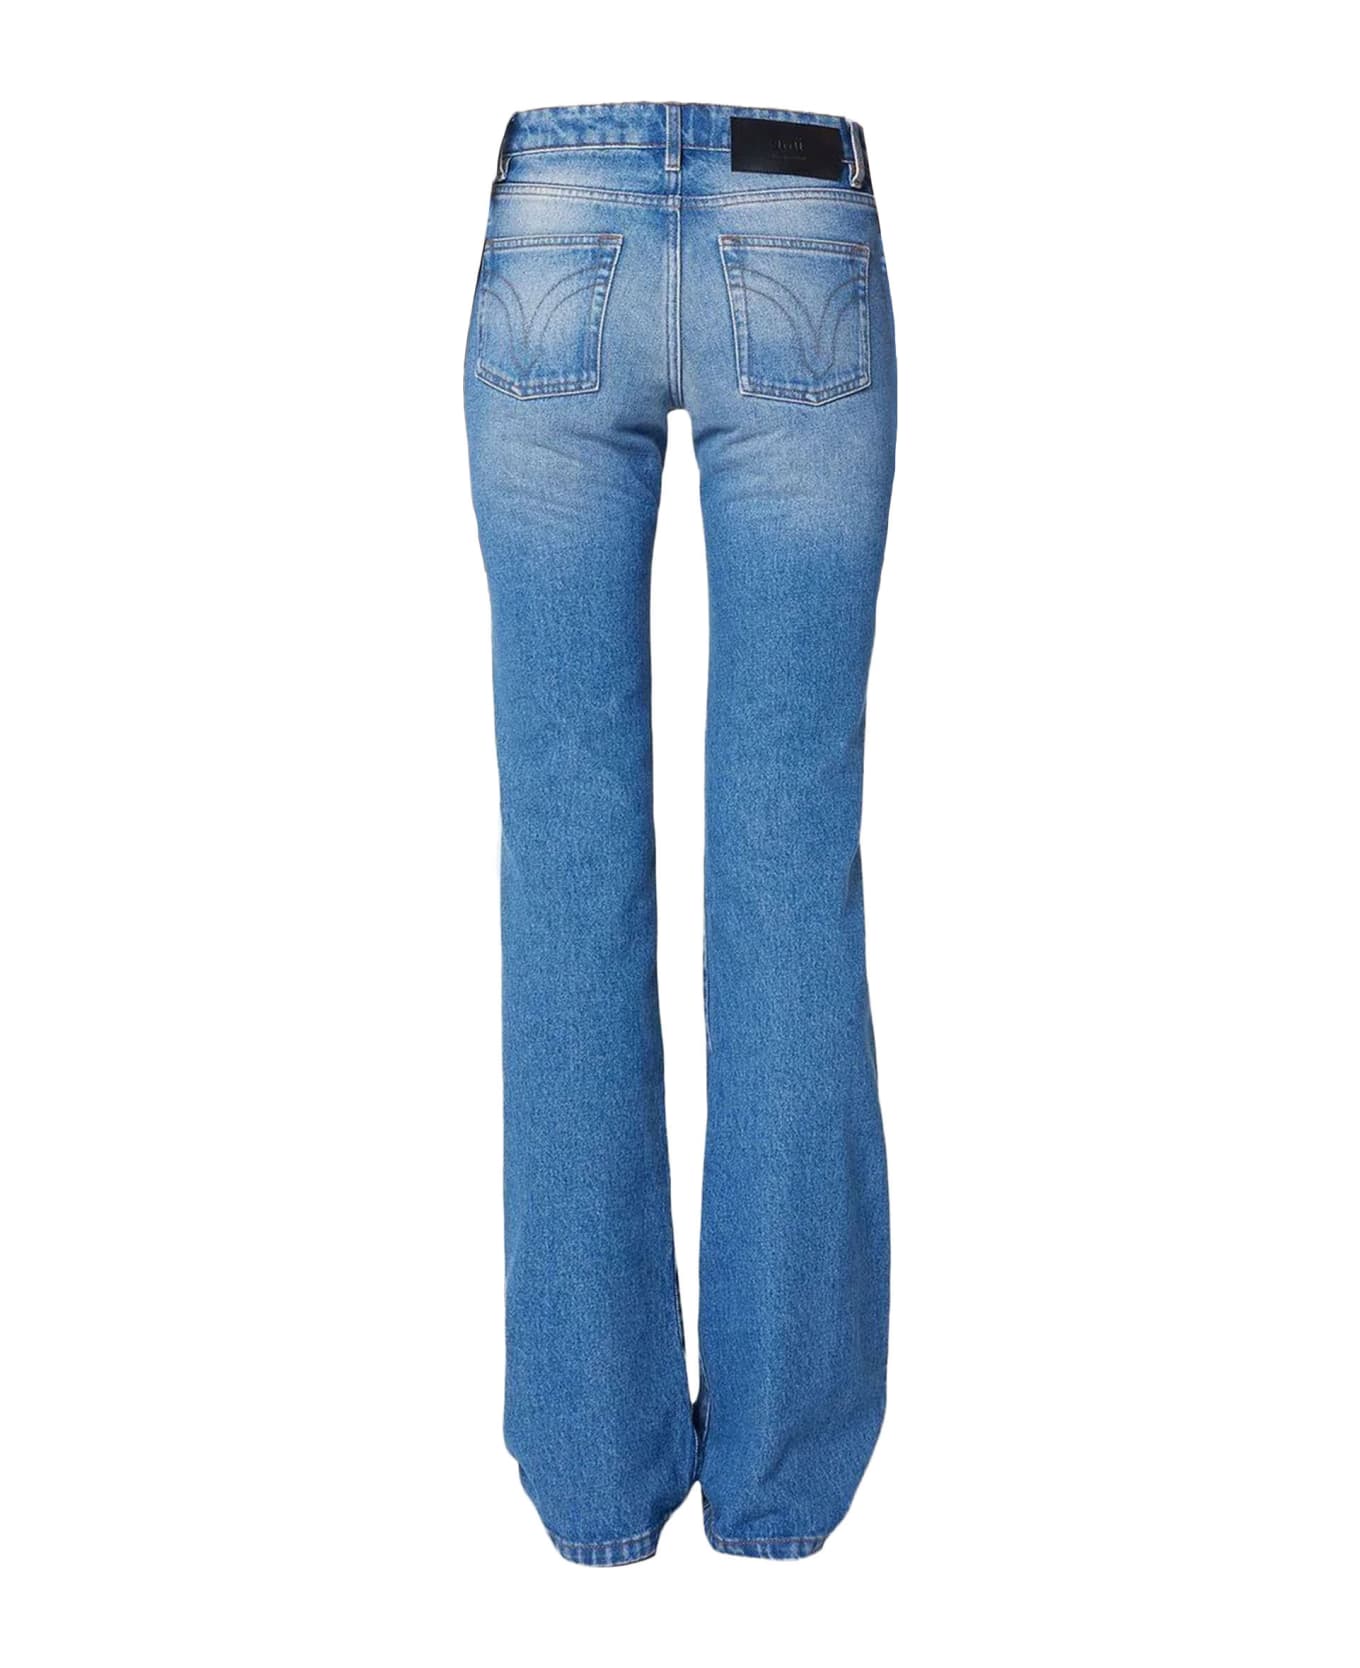 Ami Alexandre Mattiussi Blue Cotton Jeans - Denim